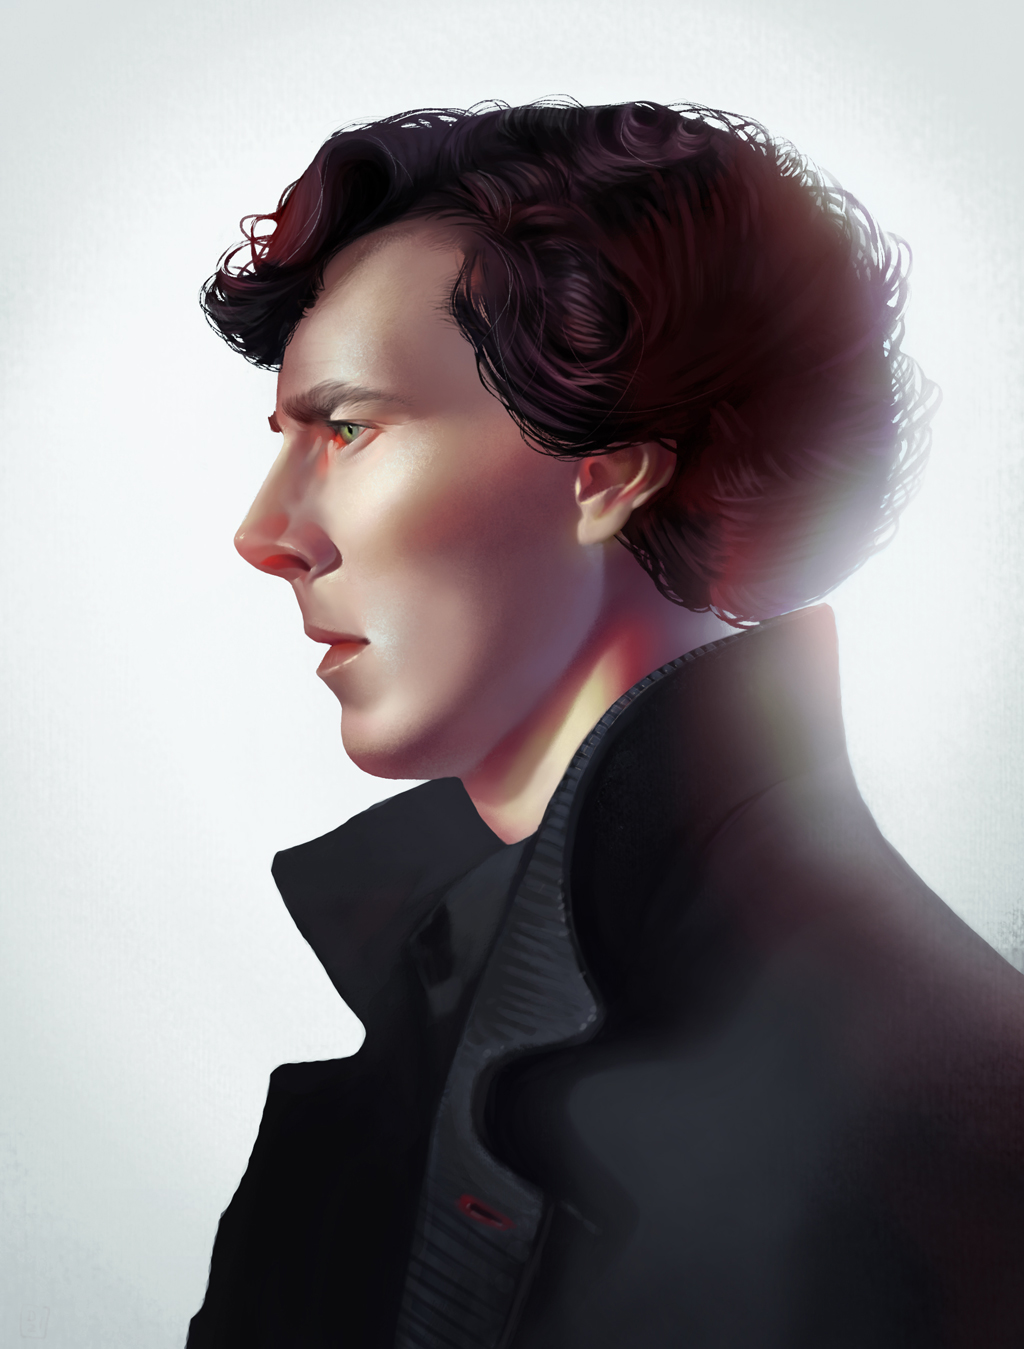 Sherlock Holmes from Sherlock (BBC) by DziKawa on DeviantArt